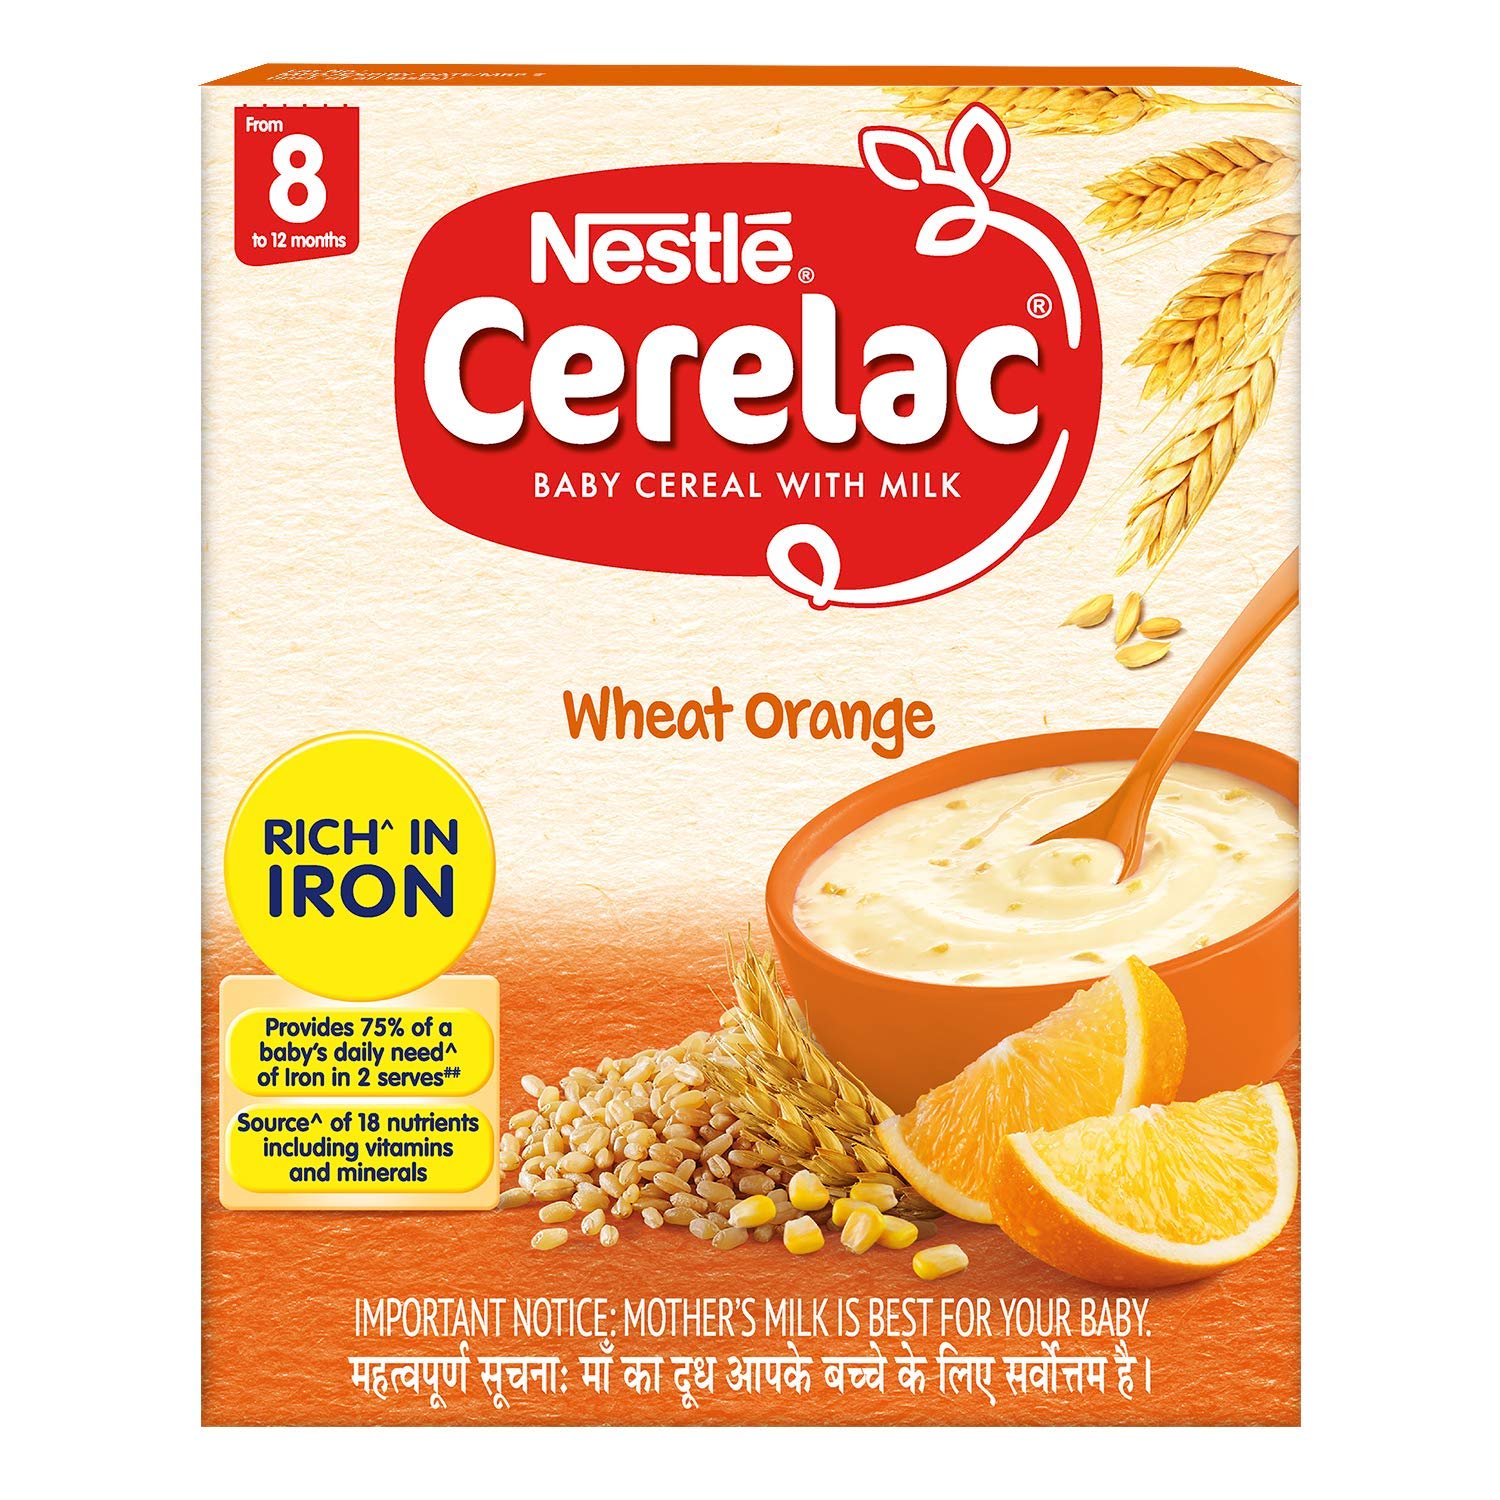 Nestle Cerelac Wheat Orange Image